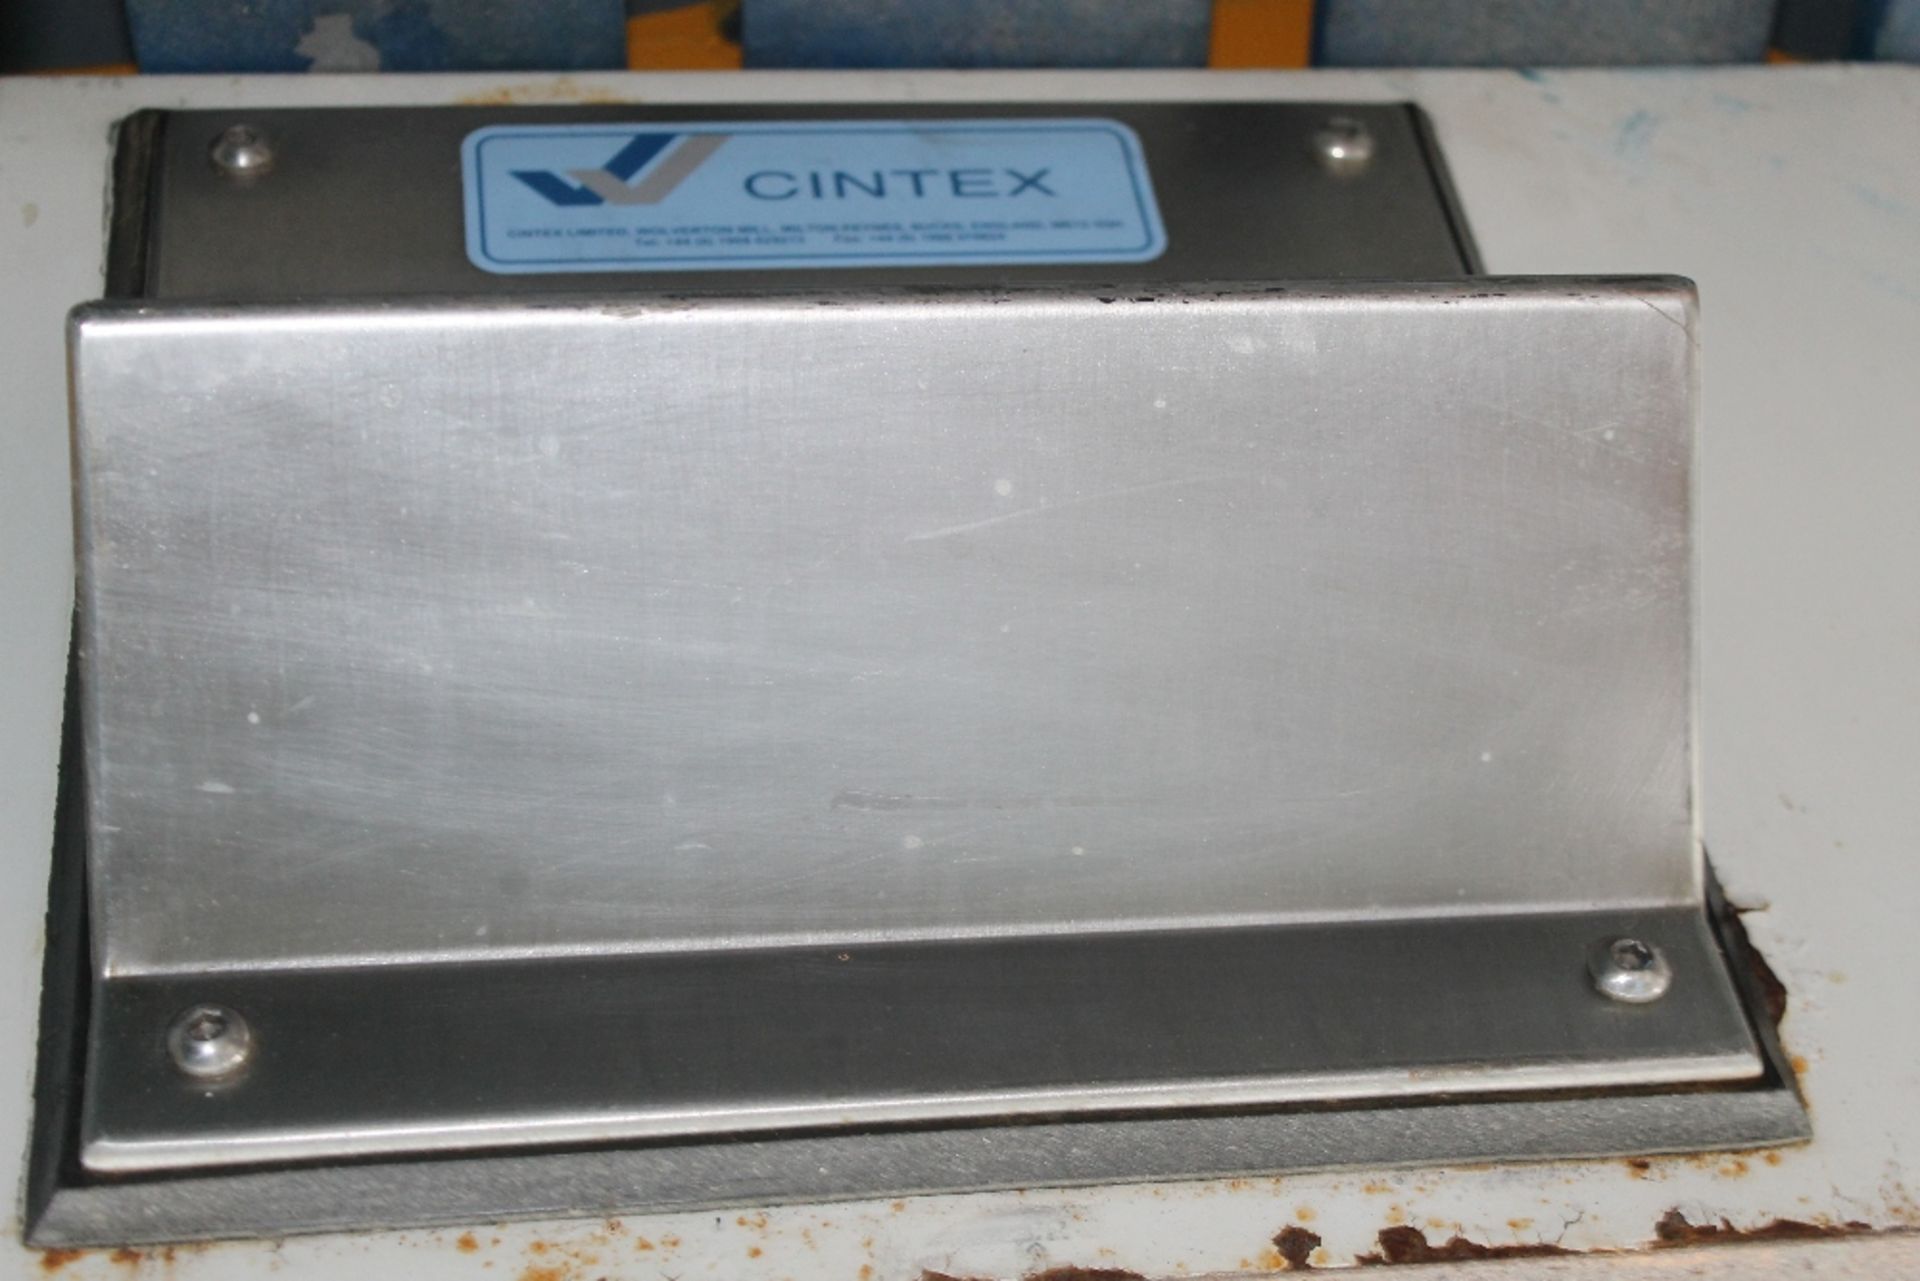 Cintex Metal Detector - as found